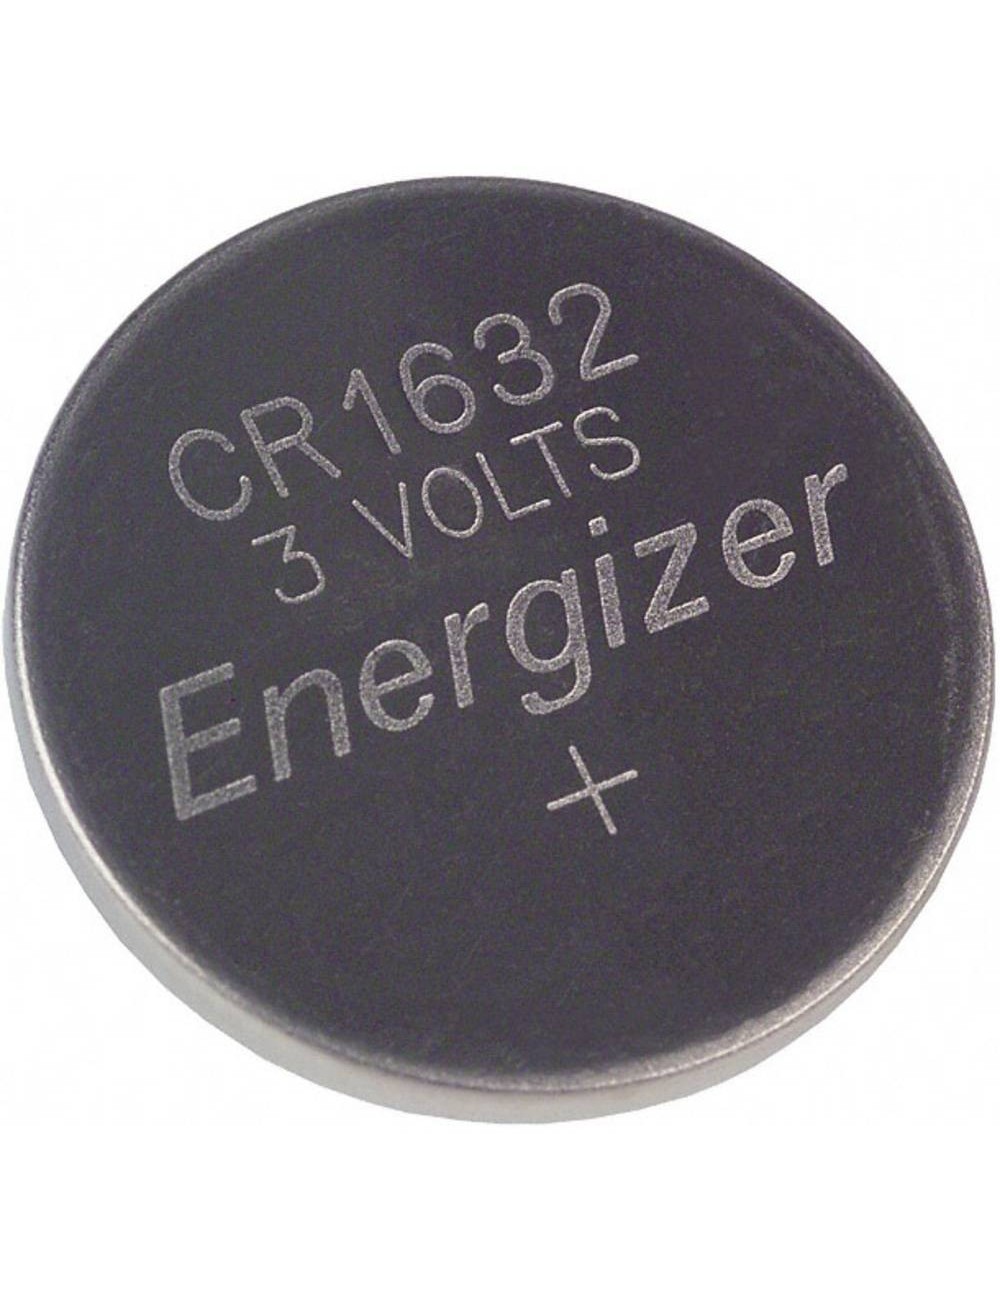 S CR1632 ENG (CR1632) Piles Lithium Bouton Energizer (3V - 130mAh)